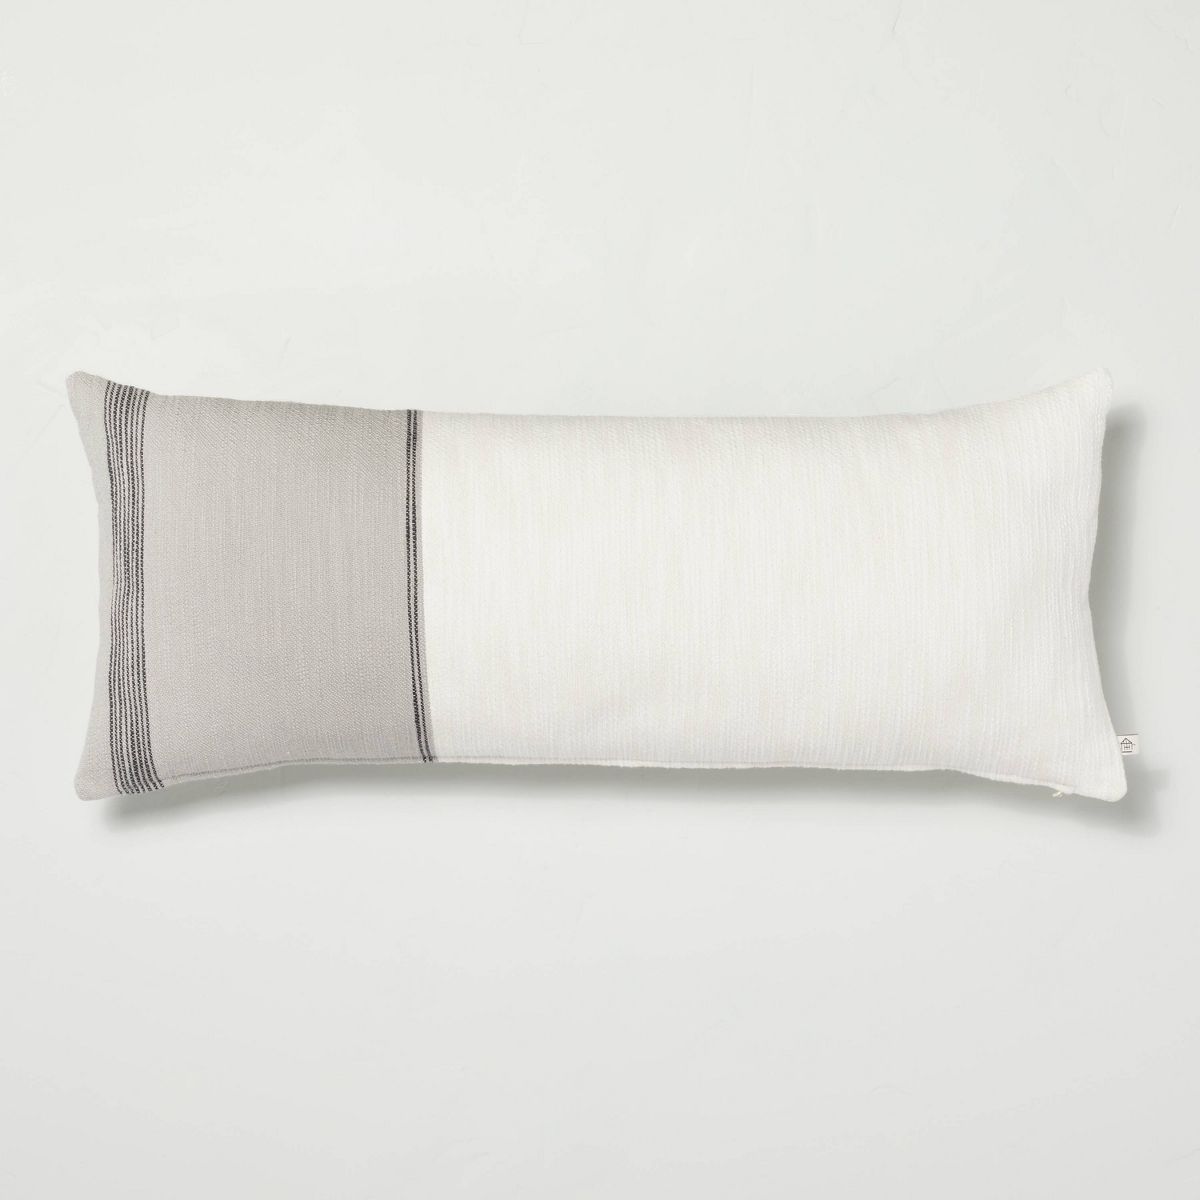 12"x30" Color Block Border Lumbar Pillow with Zipper Gray - Hearth & Hand™ with Magnolia | Target